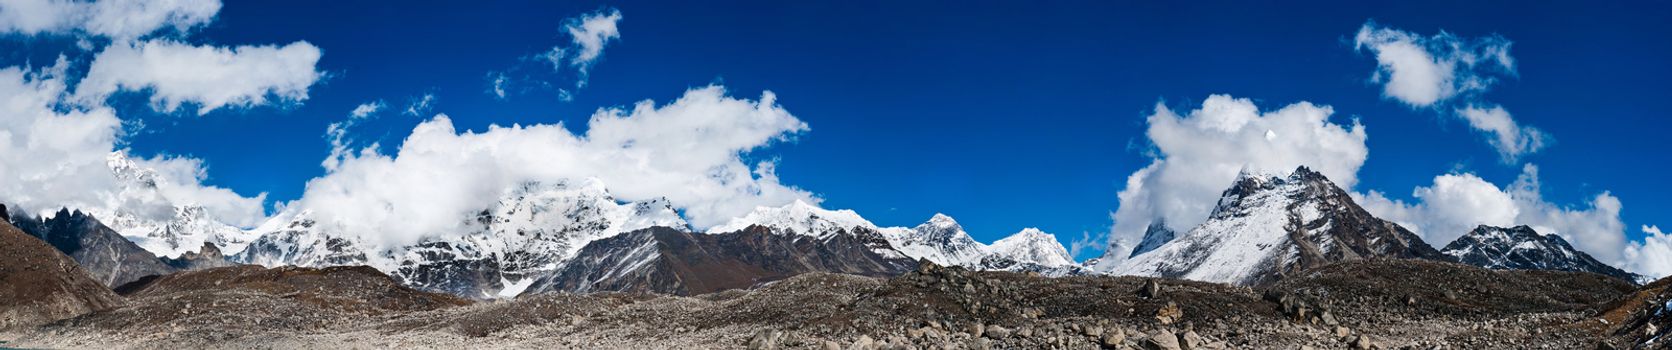 Himalaya panorama: Mountain peaks and Everest summit